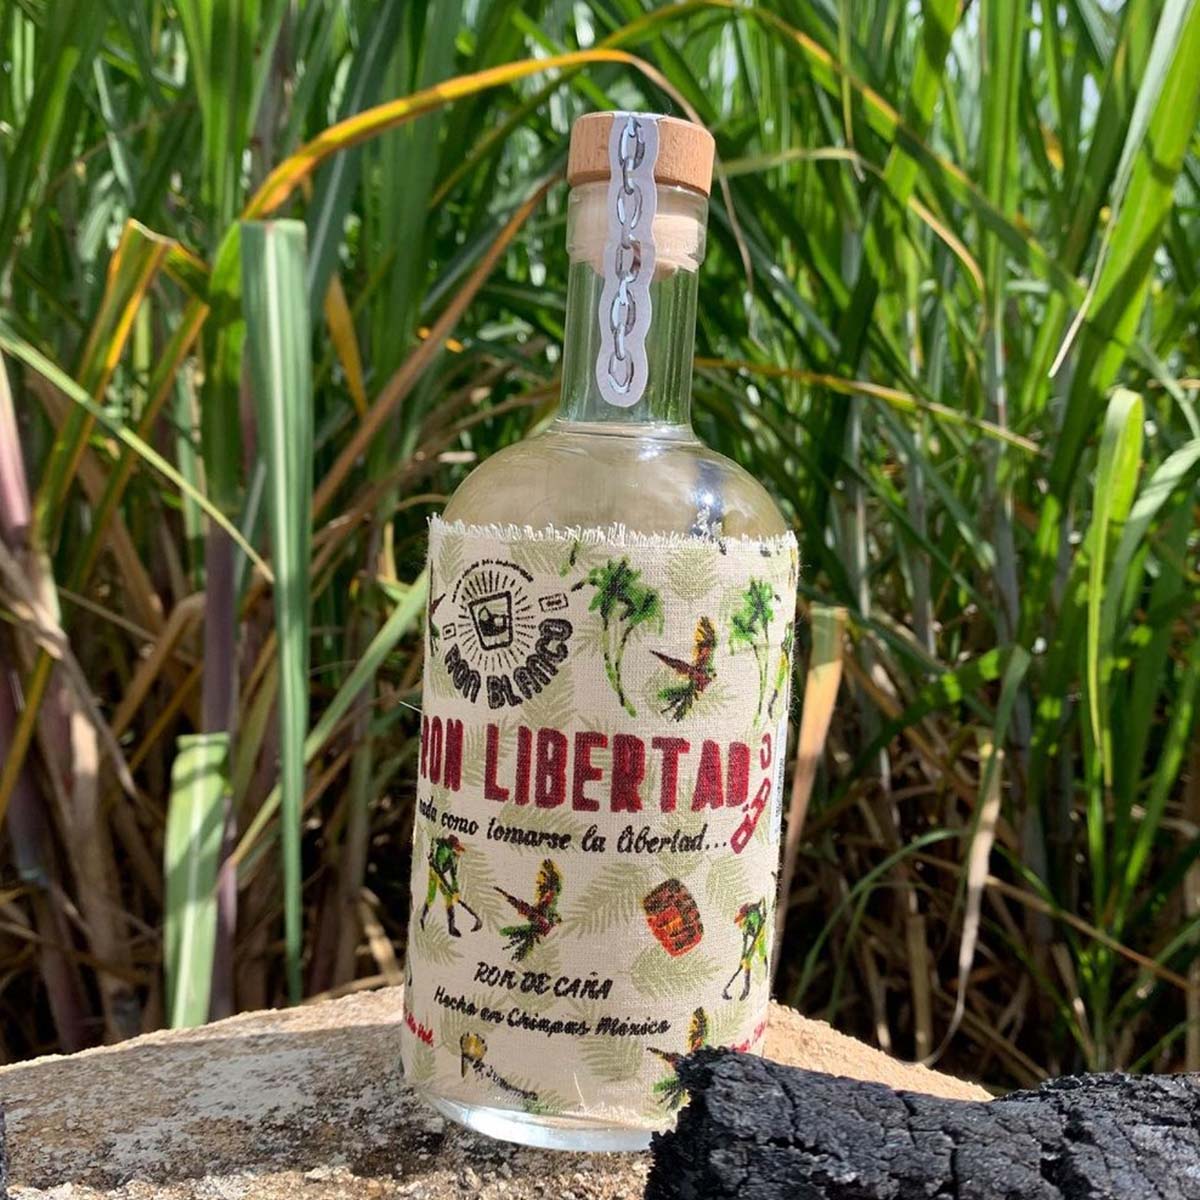 Ron Libertad Dorado Gold Rum | 1 Year | Handmade & Organic